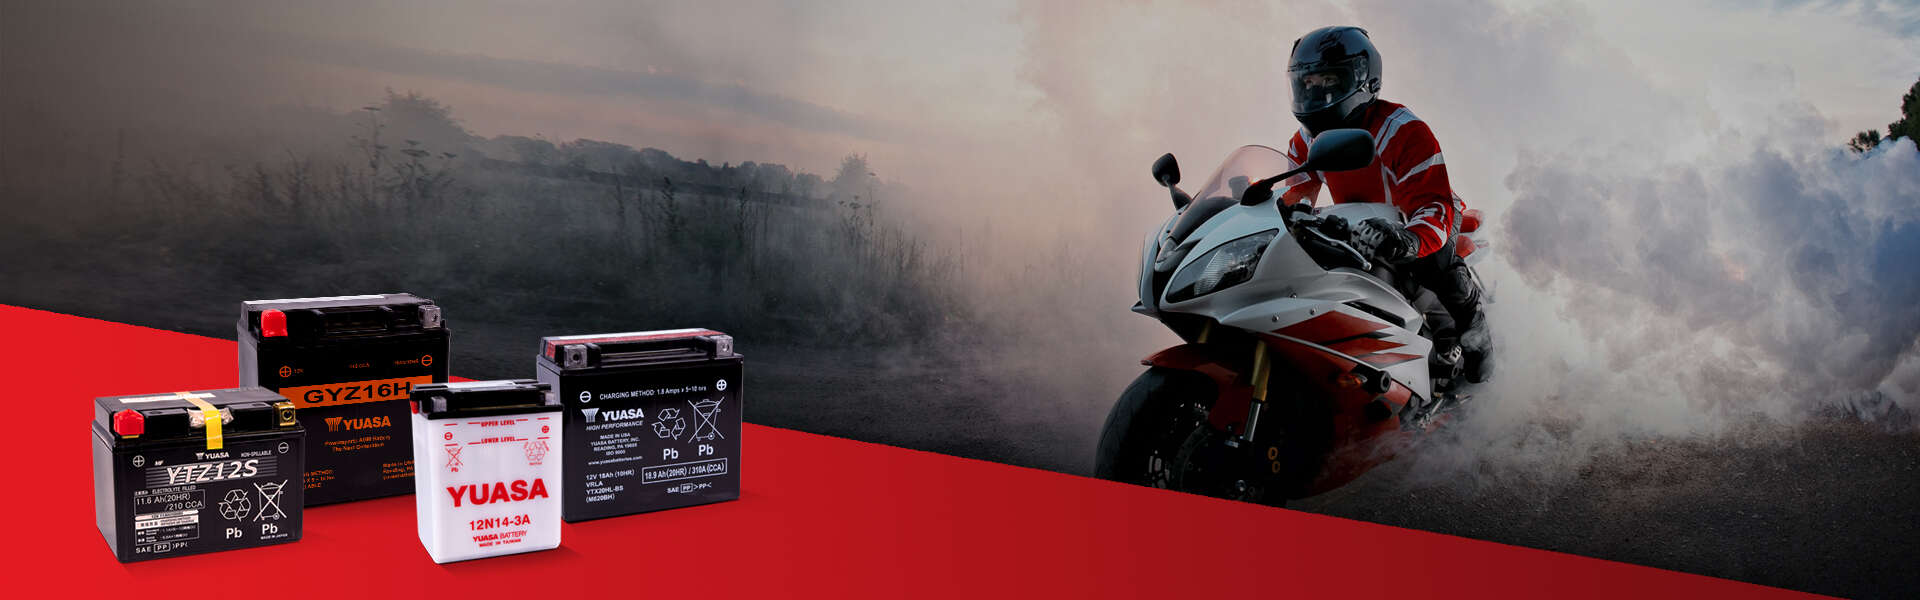 Yuasa Motorcycle and Powersports Battery Hero